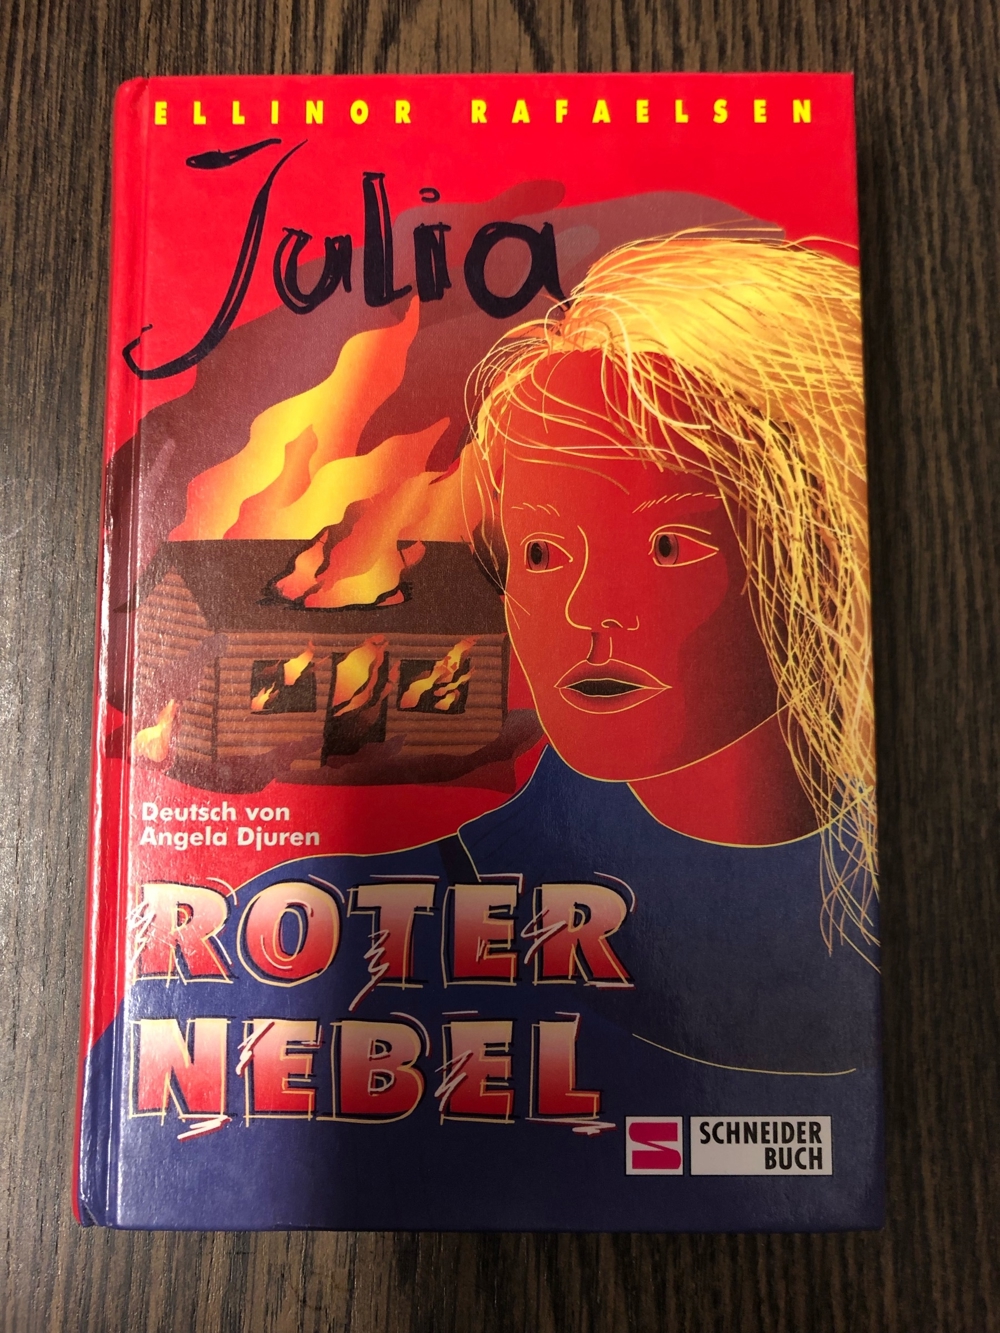 Julia - Roter Nebel, Ellinor Rafaelsen